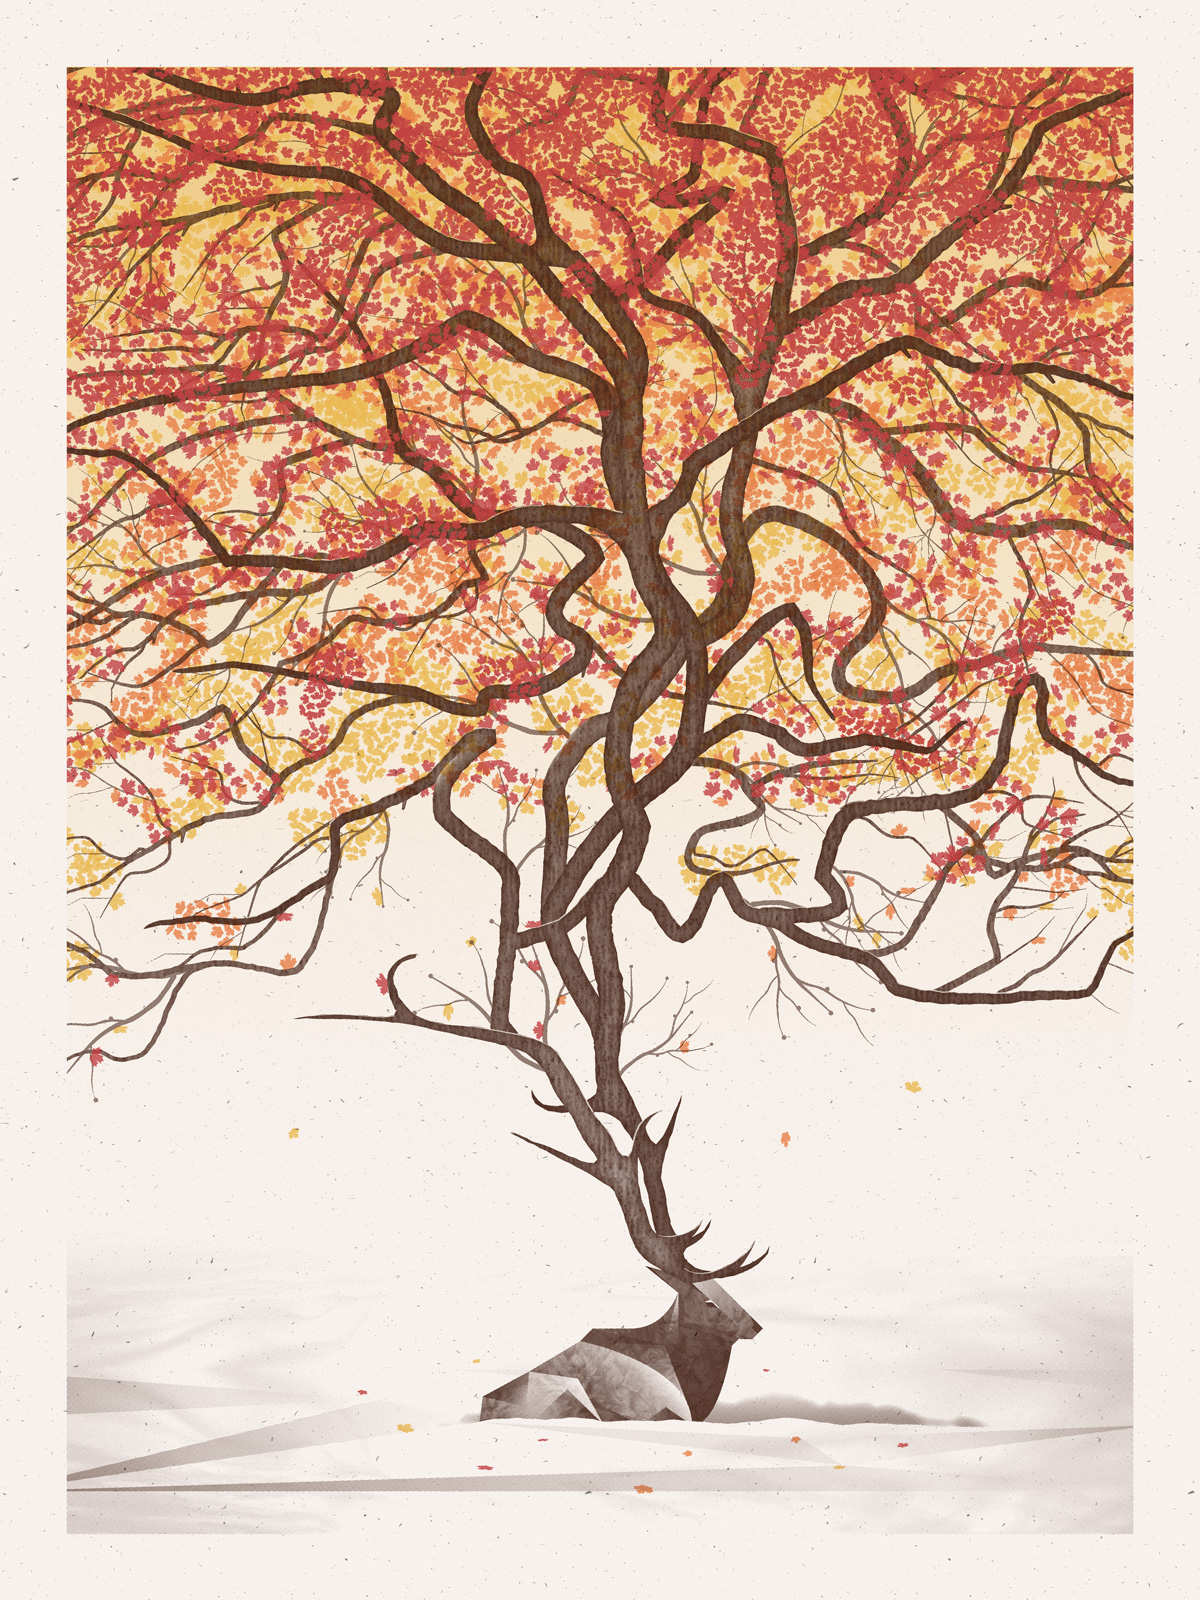 Big Tree Art Prints Picture Image HD Wallpaper Free Download